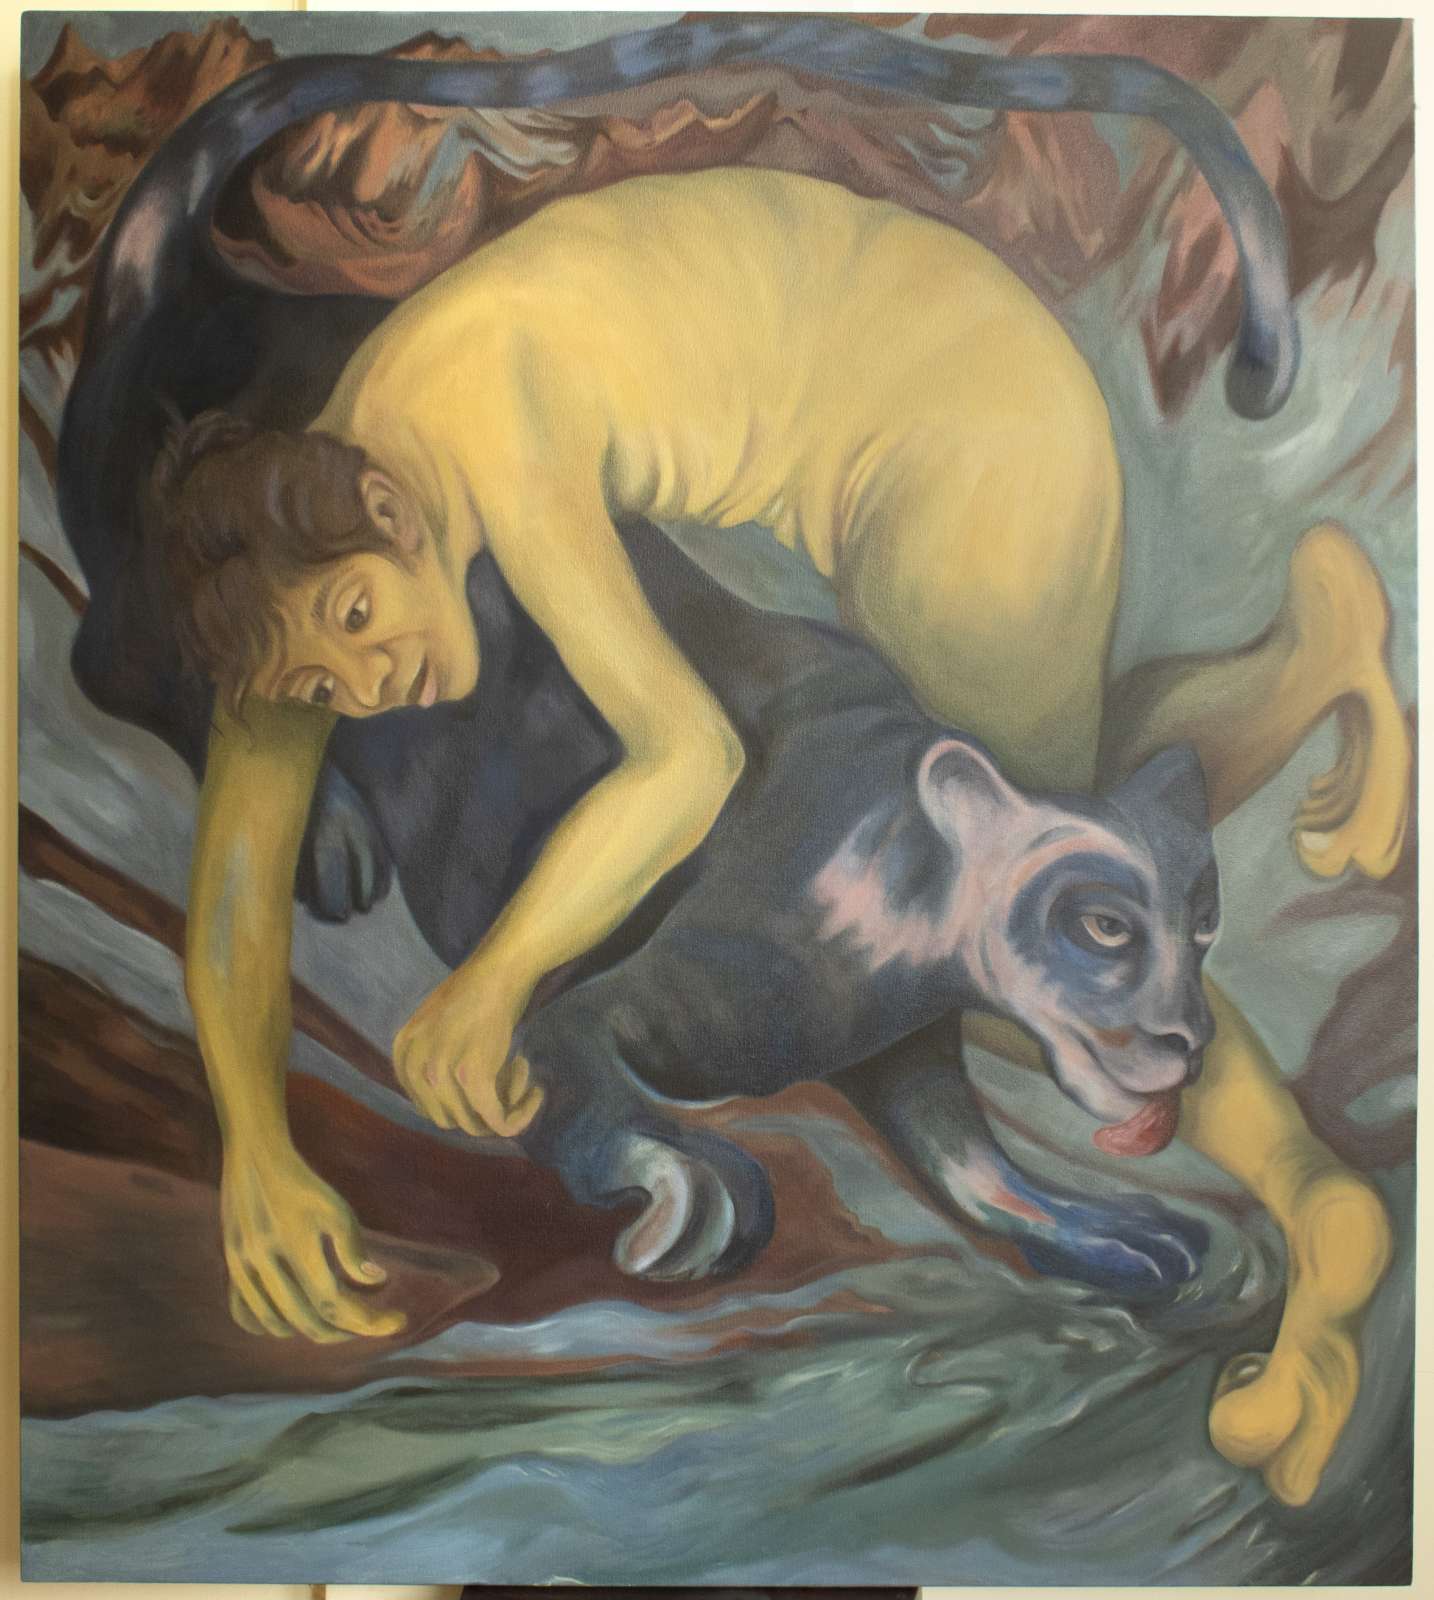 Shailee Mehta, A troublesome arrangement, 2022, Oil on canvas, 101.6 x 114.3 cm